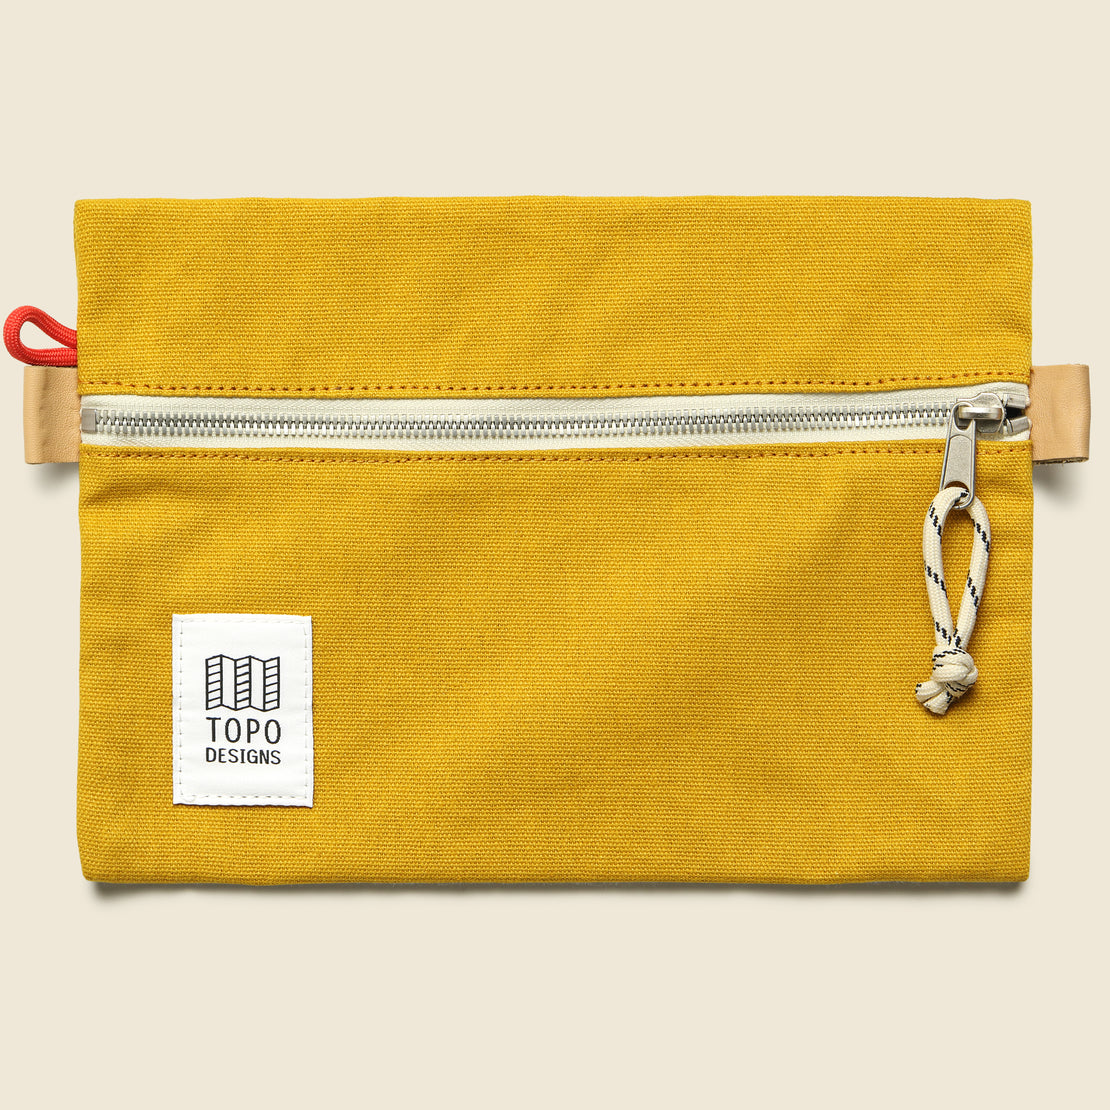 Topo Designs Medium Accessory Bag - Mustard Canvas